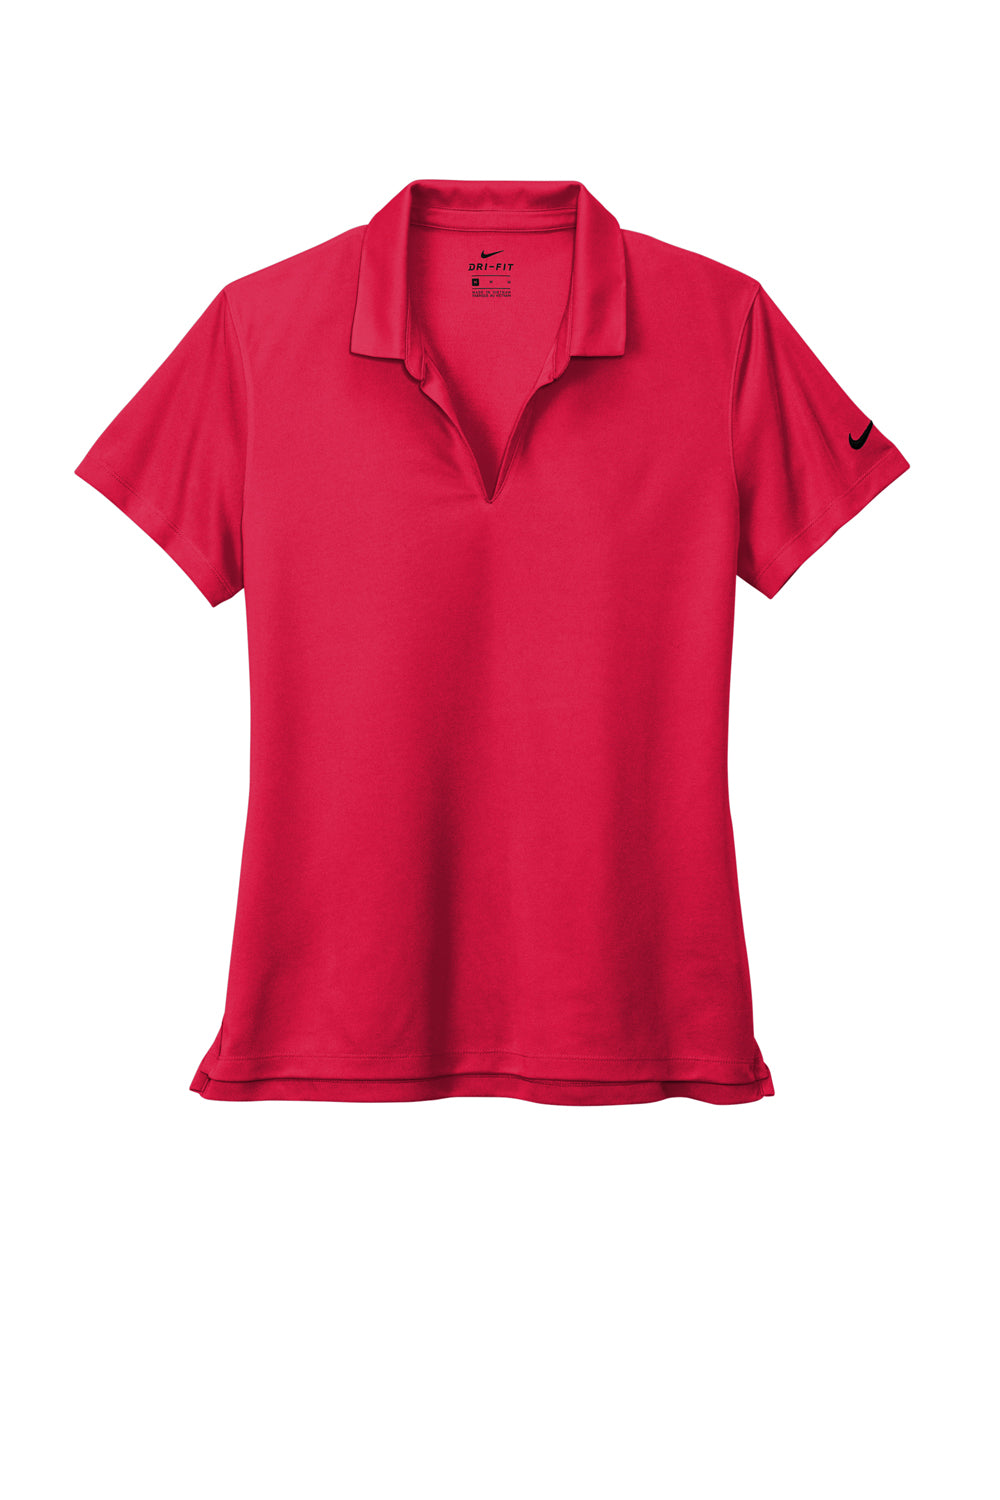 Nike NKDC1991 Womens Dri-Fit Moisture Wicking Micro Pique 2.0 Short Sleeve Polo Shirt University Red Flat Front